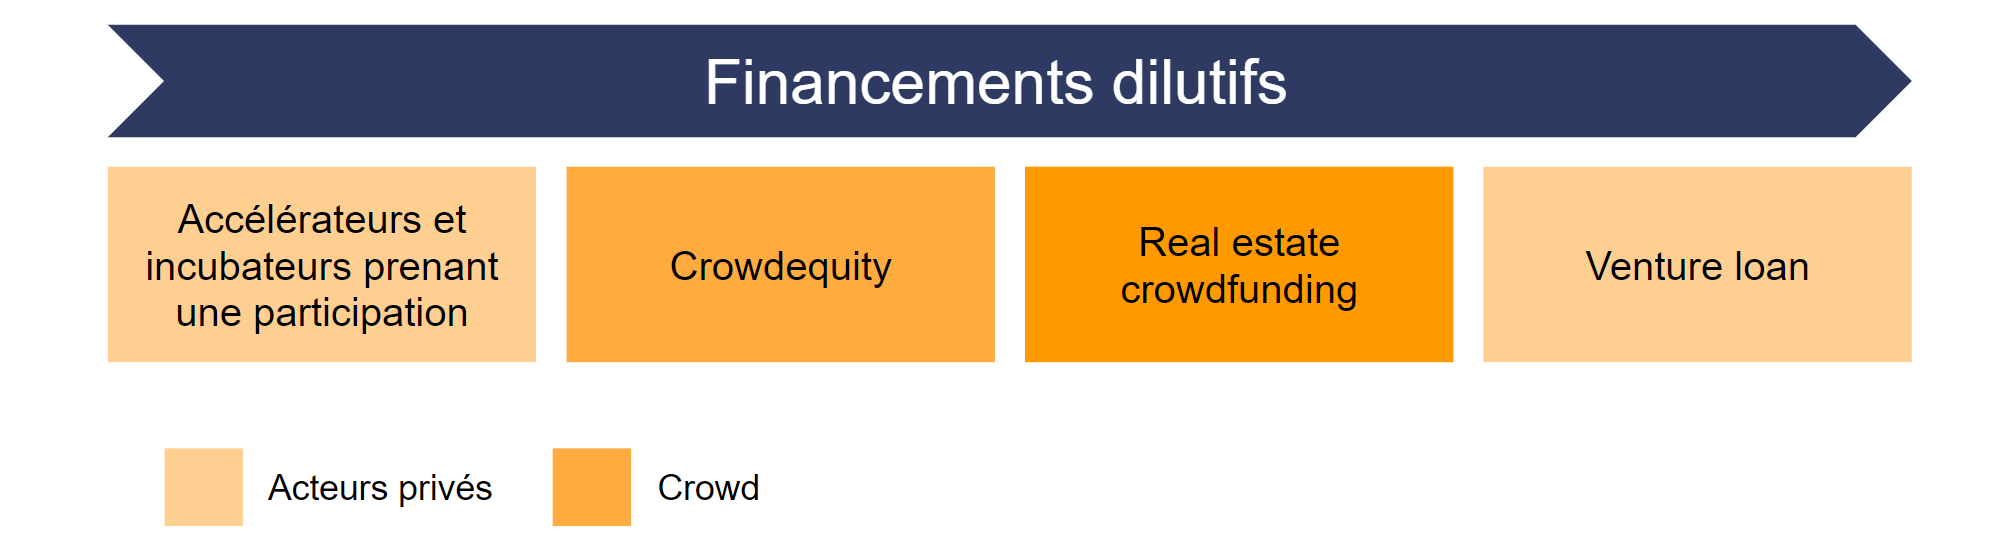 financements_dilutifs.png